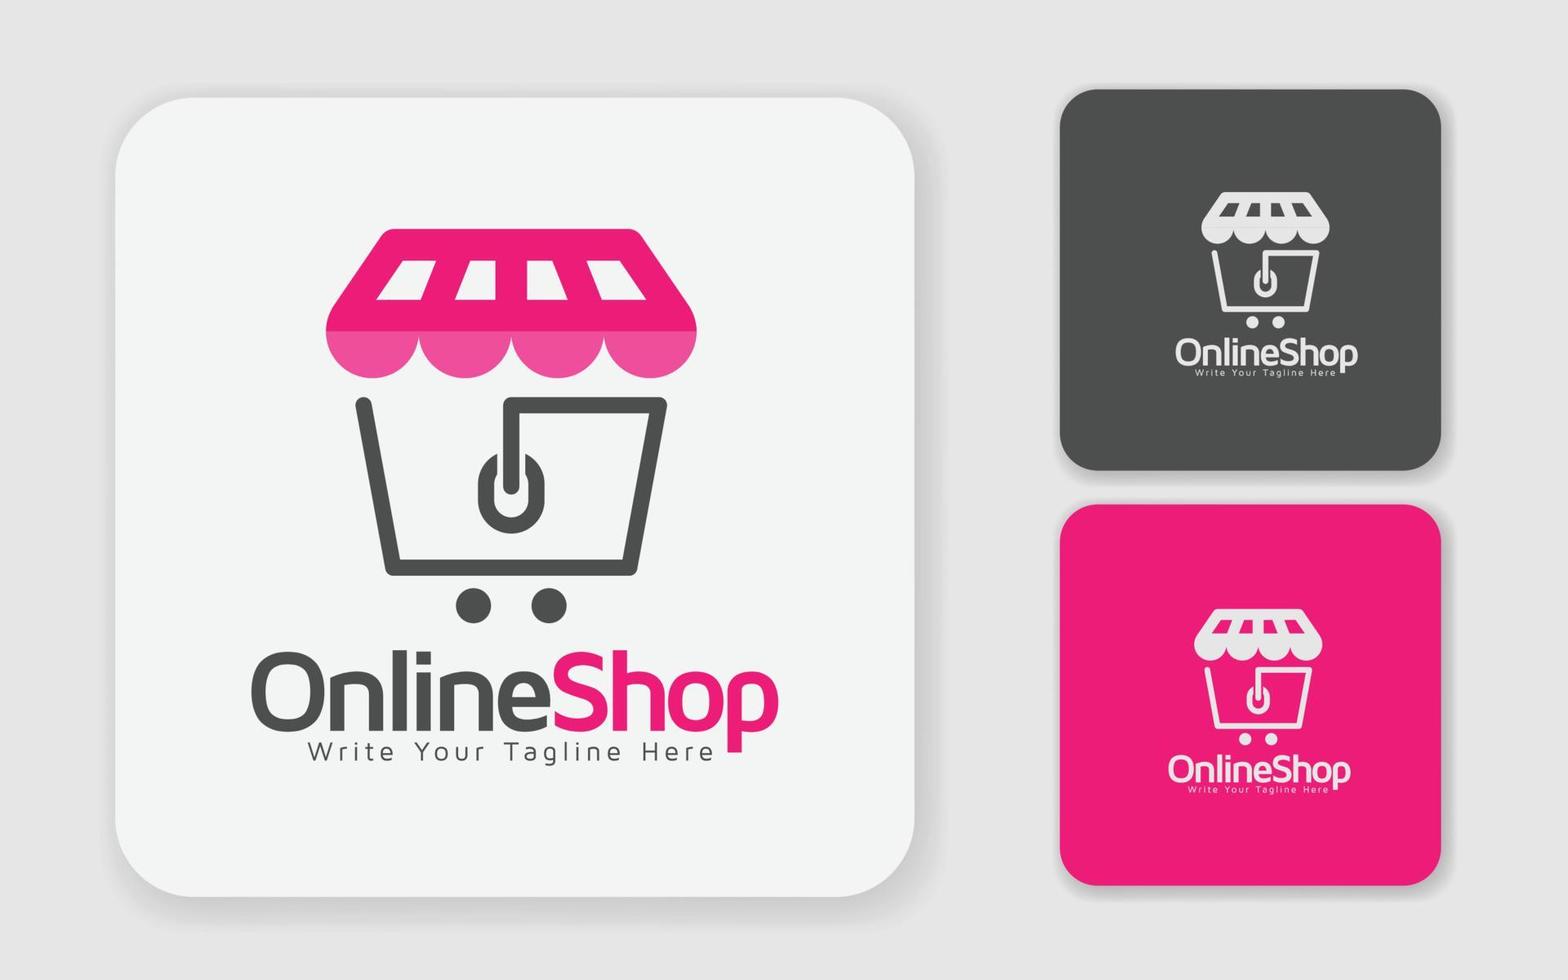 Online Shop Logo Design. Illustration Vector Graphic Of Shopping Cart And Shop Bag Combination Logo Design Concept. Perfect For Ecommerce, Sale, Discount Or Store Web Element. Ecommerce Platform Logo.